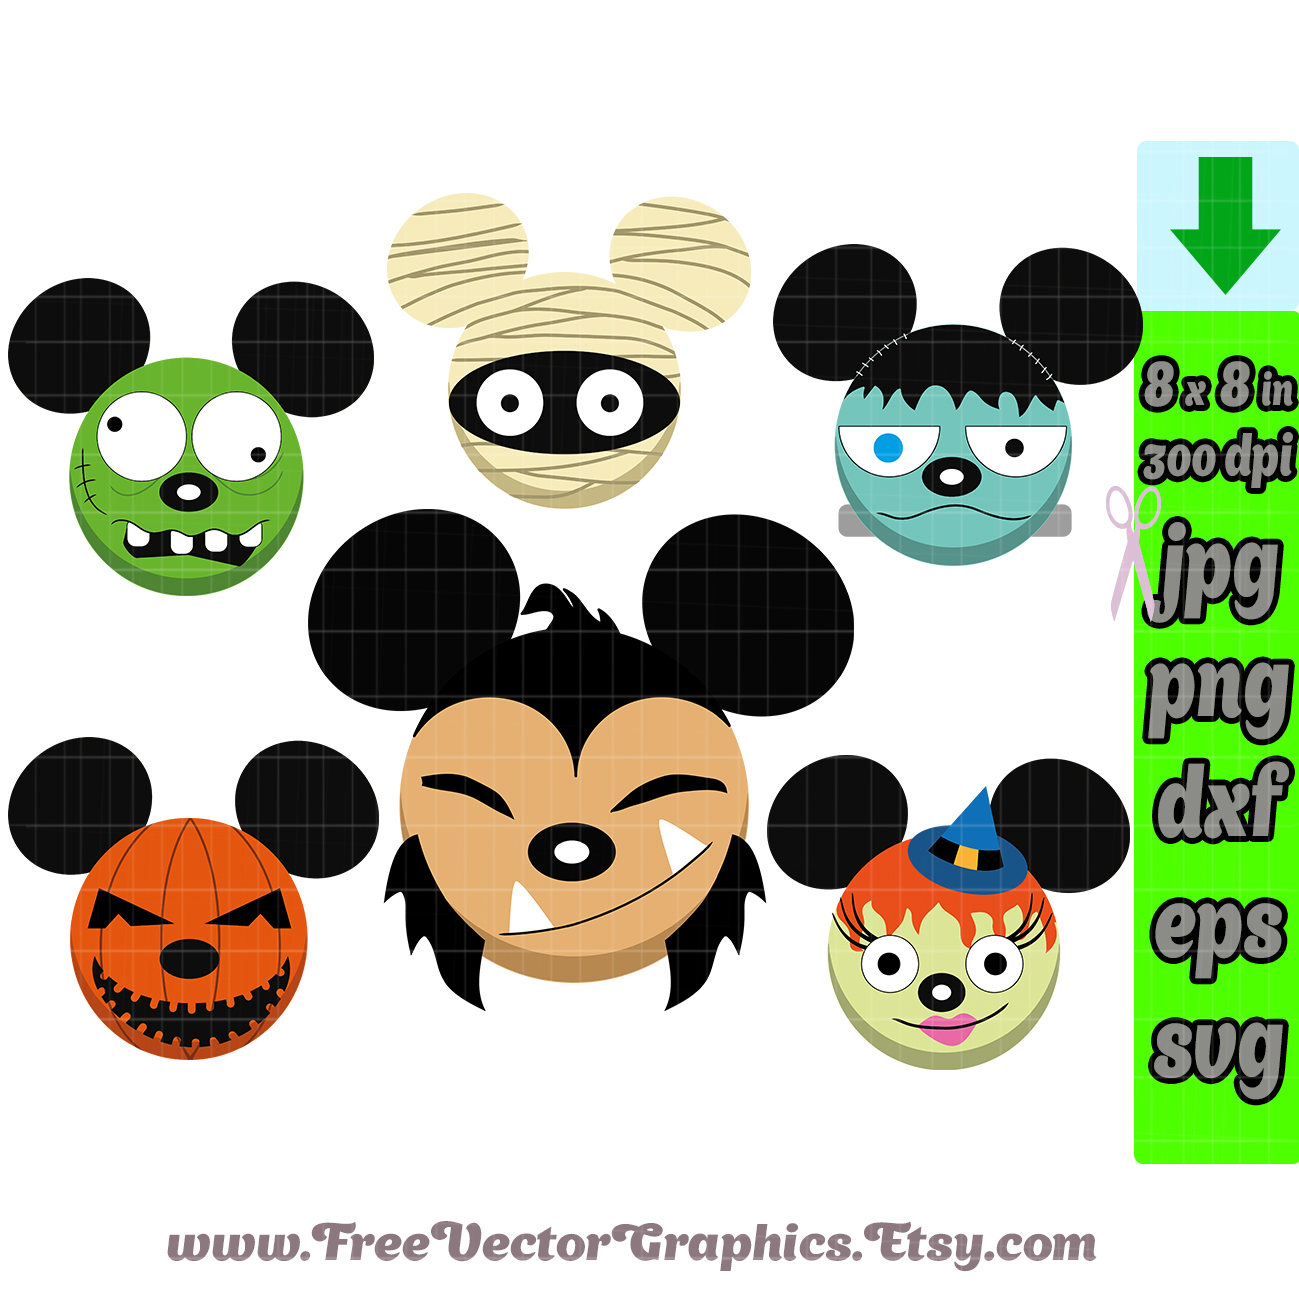 Free Cricut Disney Designs - Layered SVG Cut File